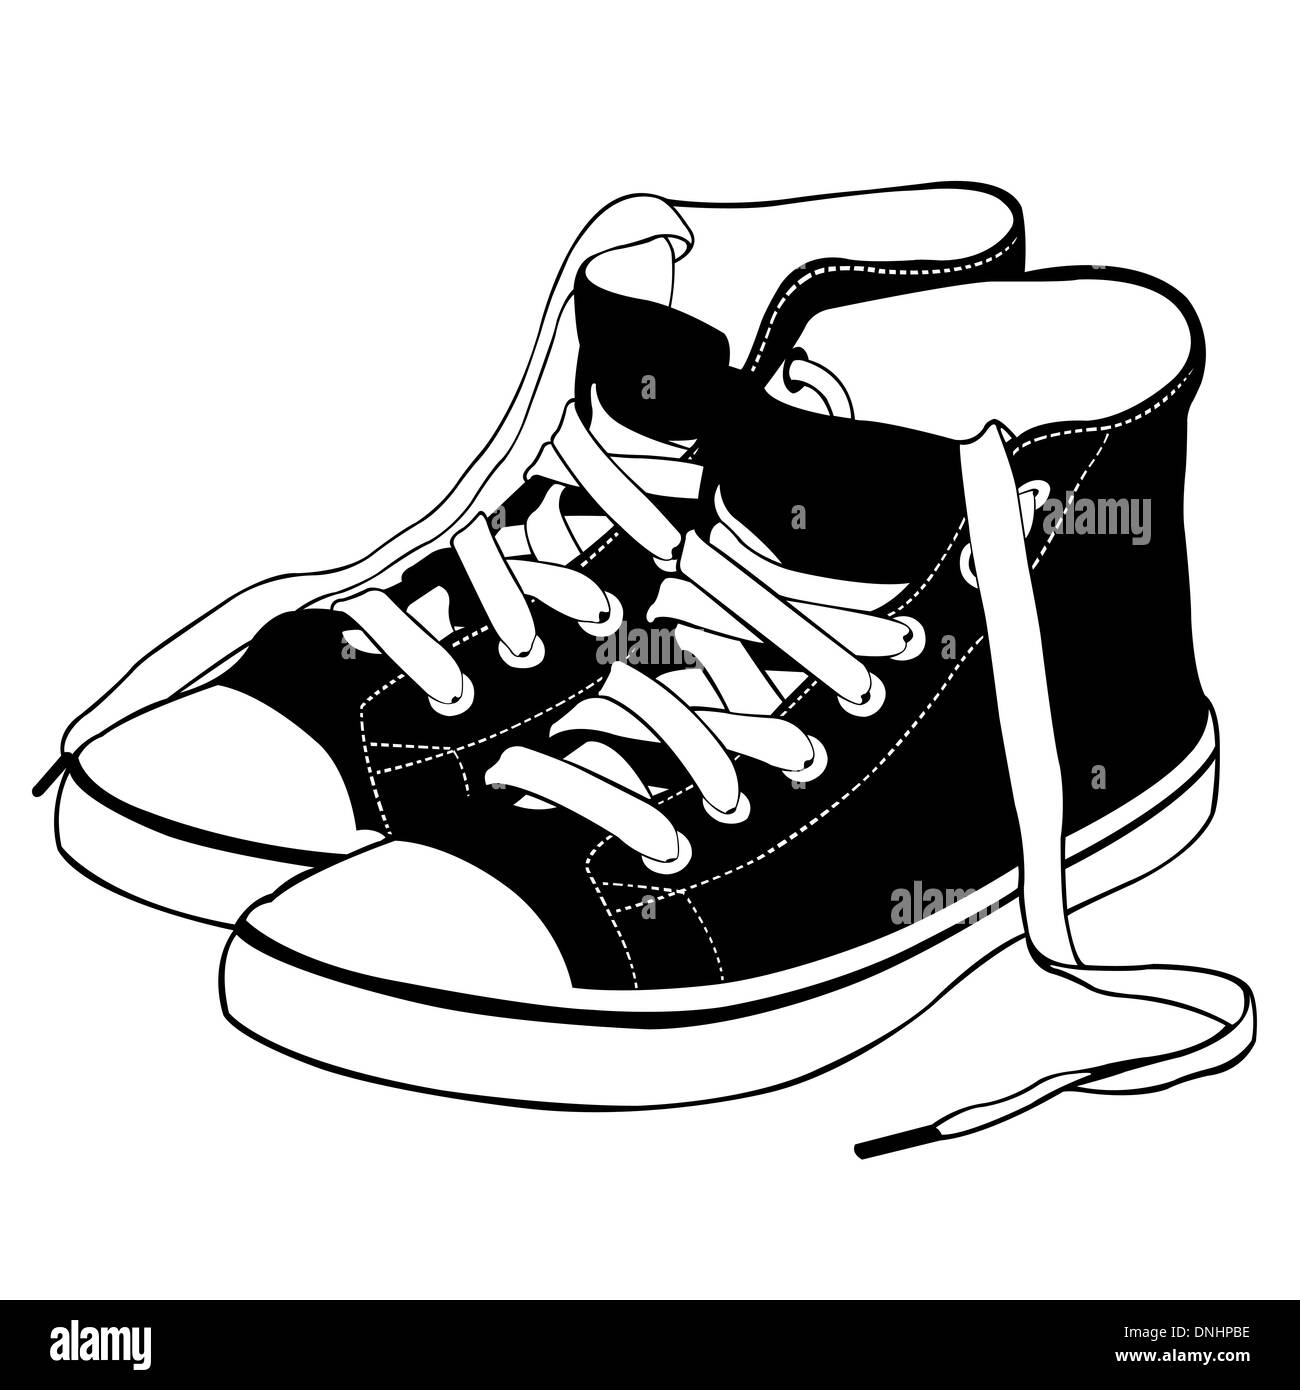 sneakers illustration Stock Photo